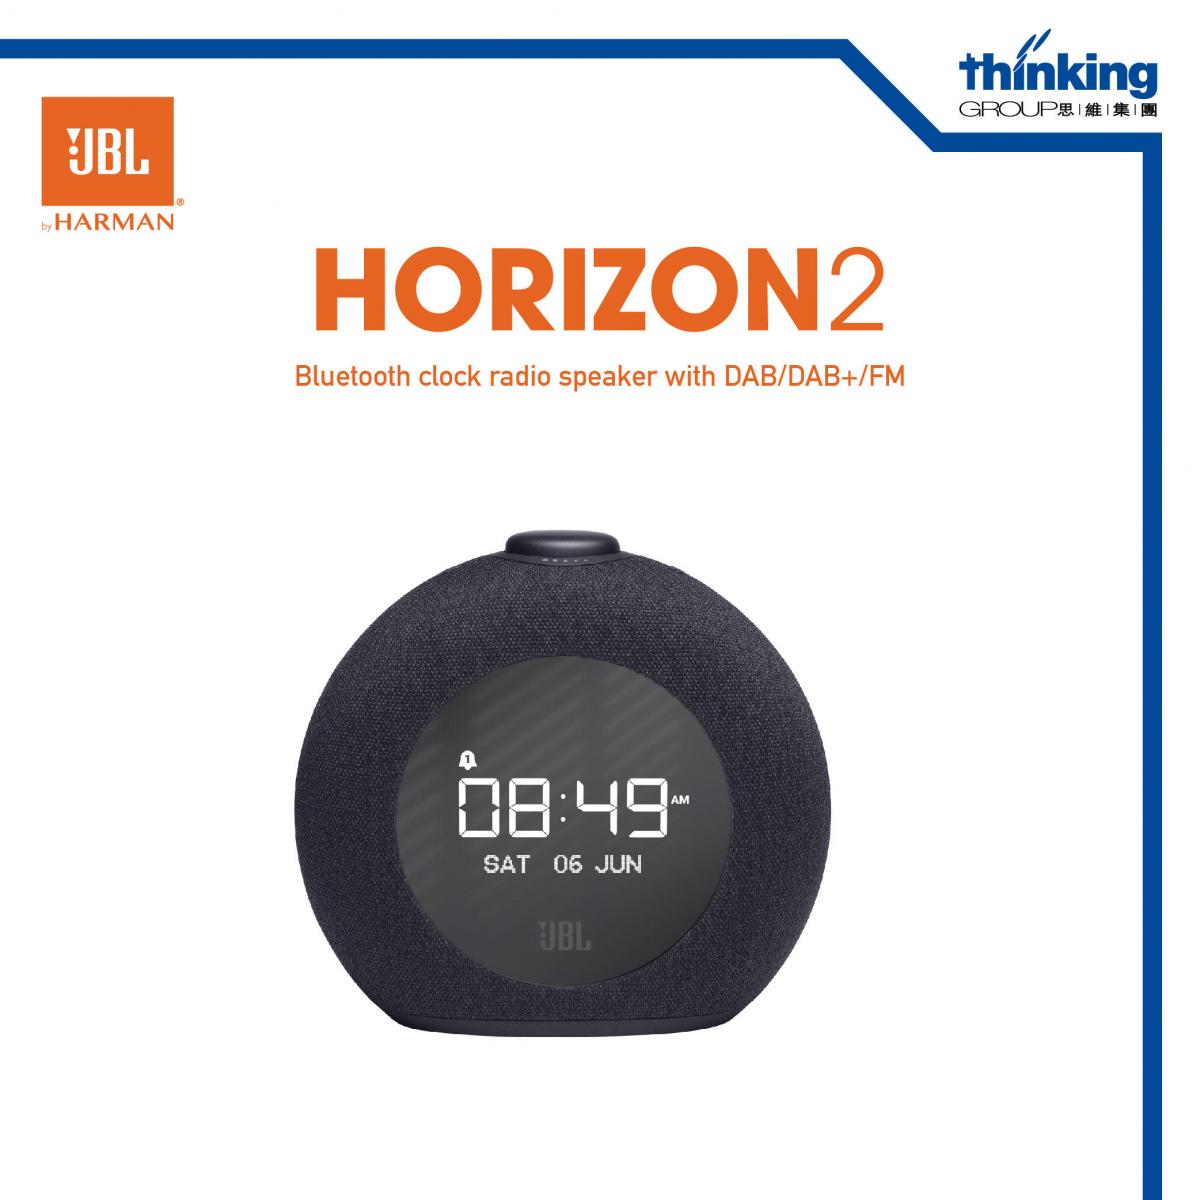 JBL Horizon 2 Bluetooth Clock Radio Speaker with FM/DAB/DAB+ (Grey